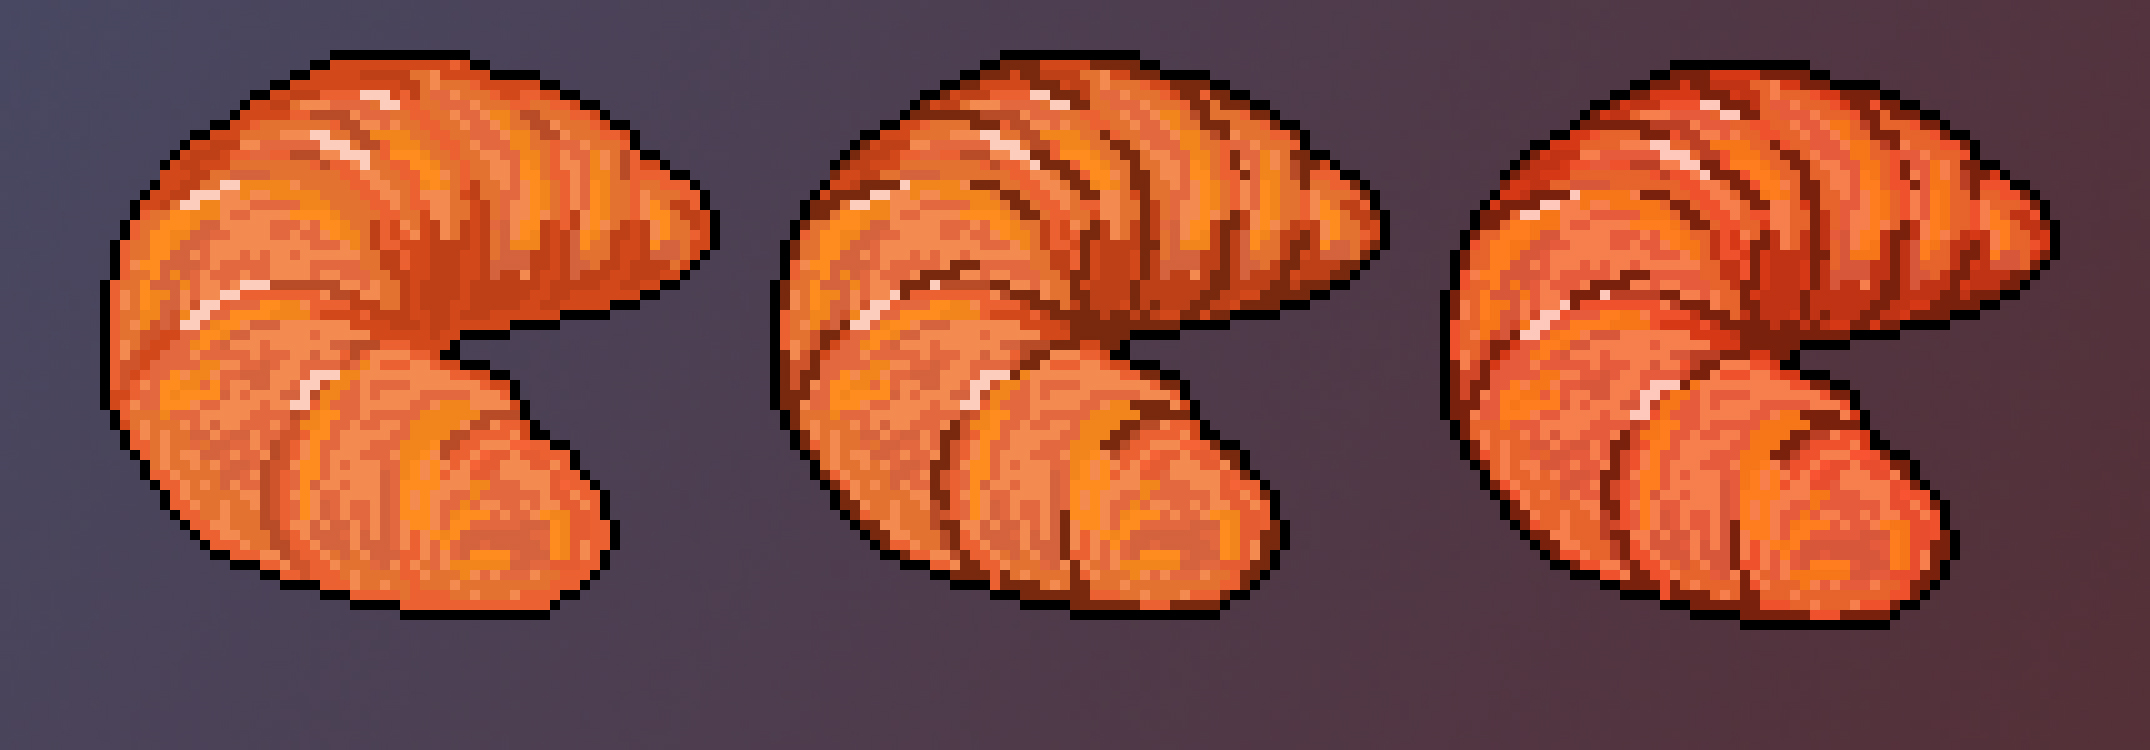 Pixel Bakon and Bread